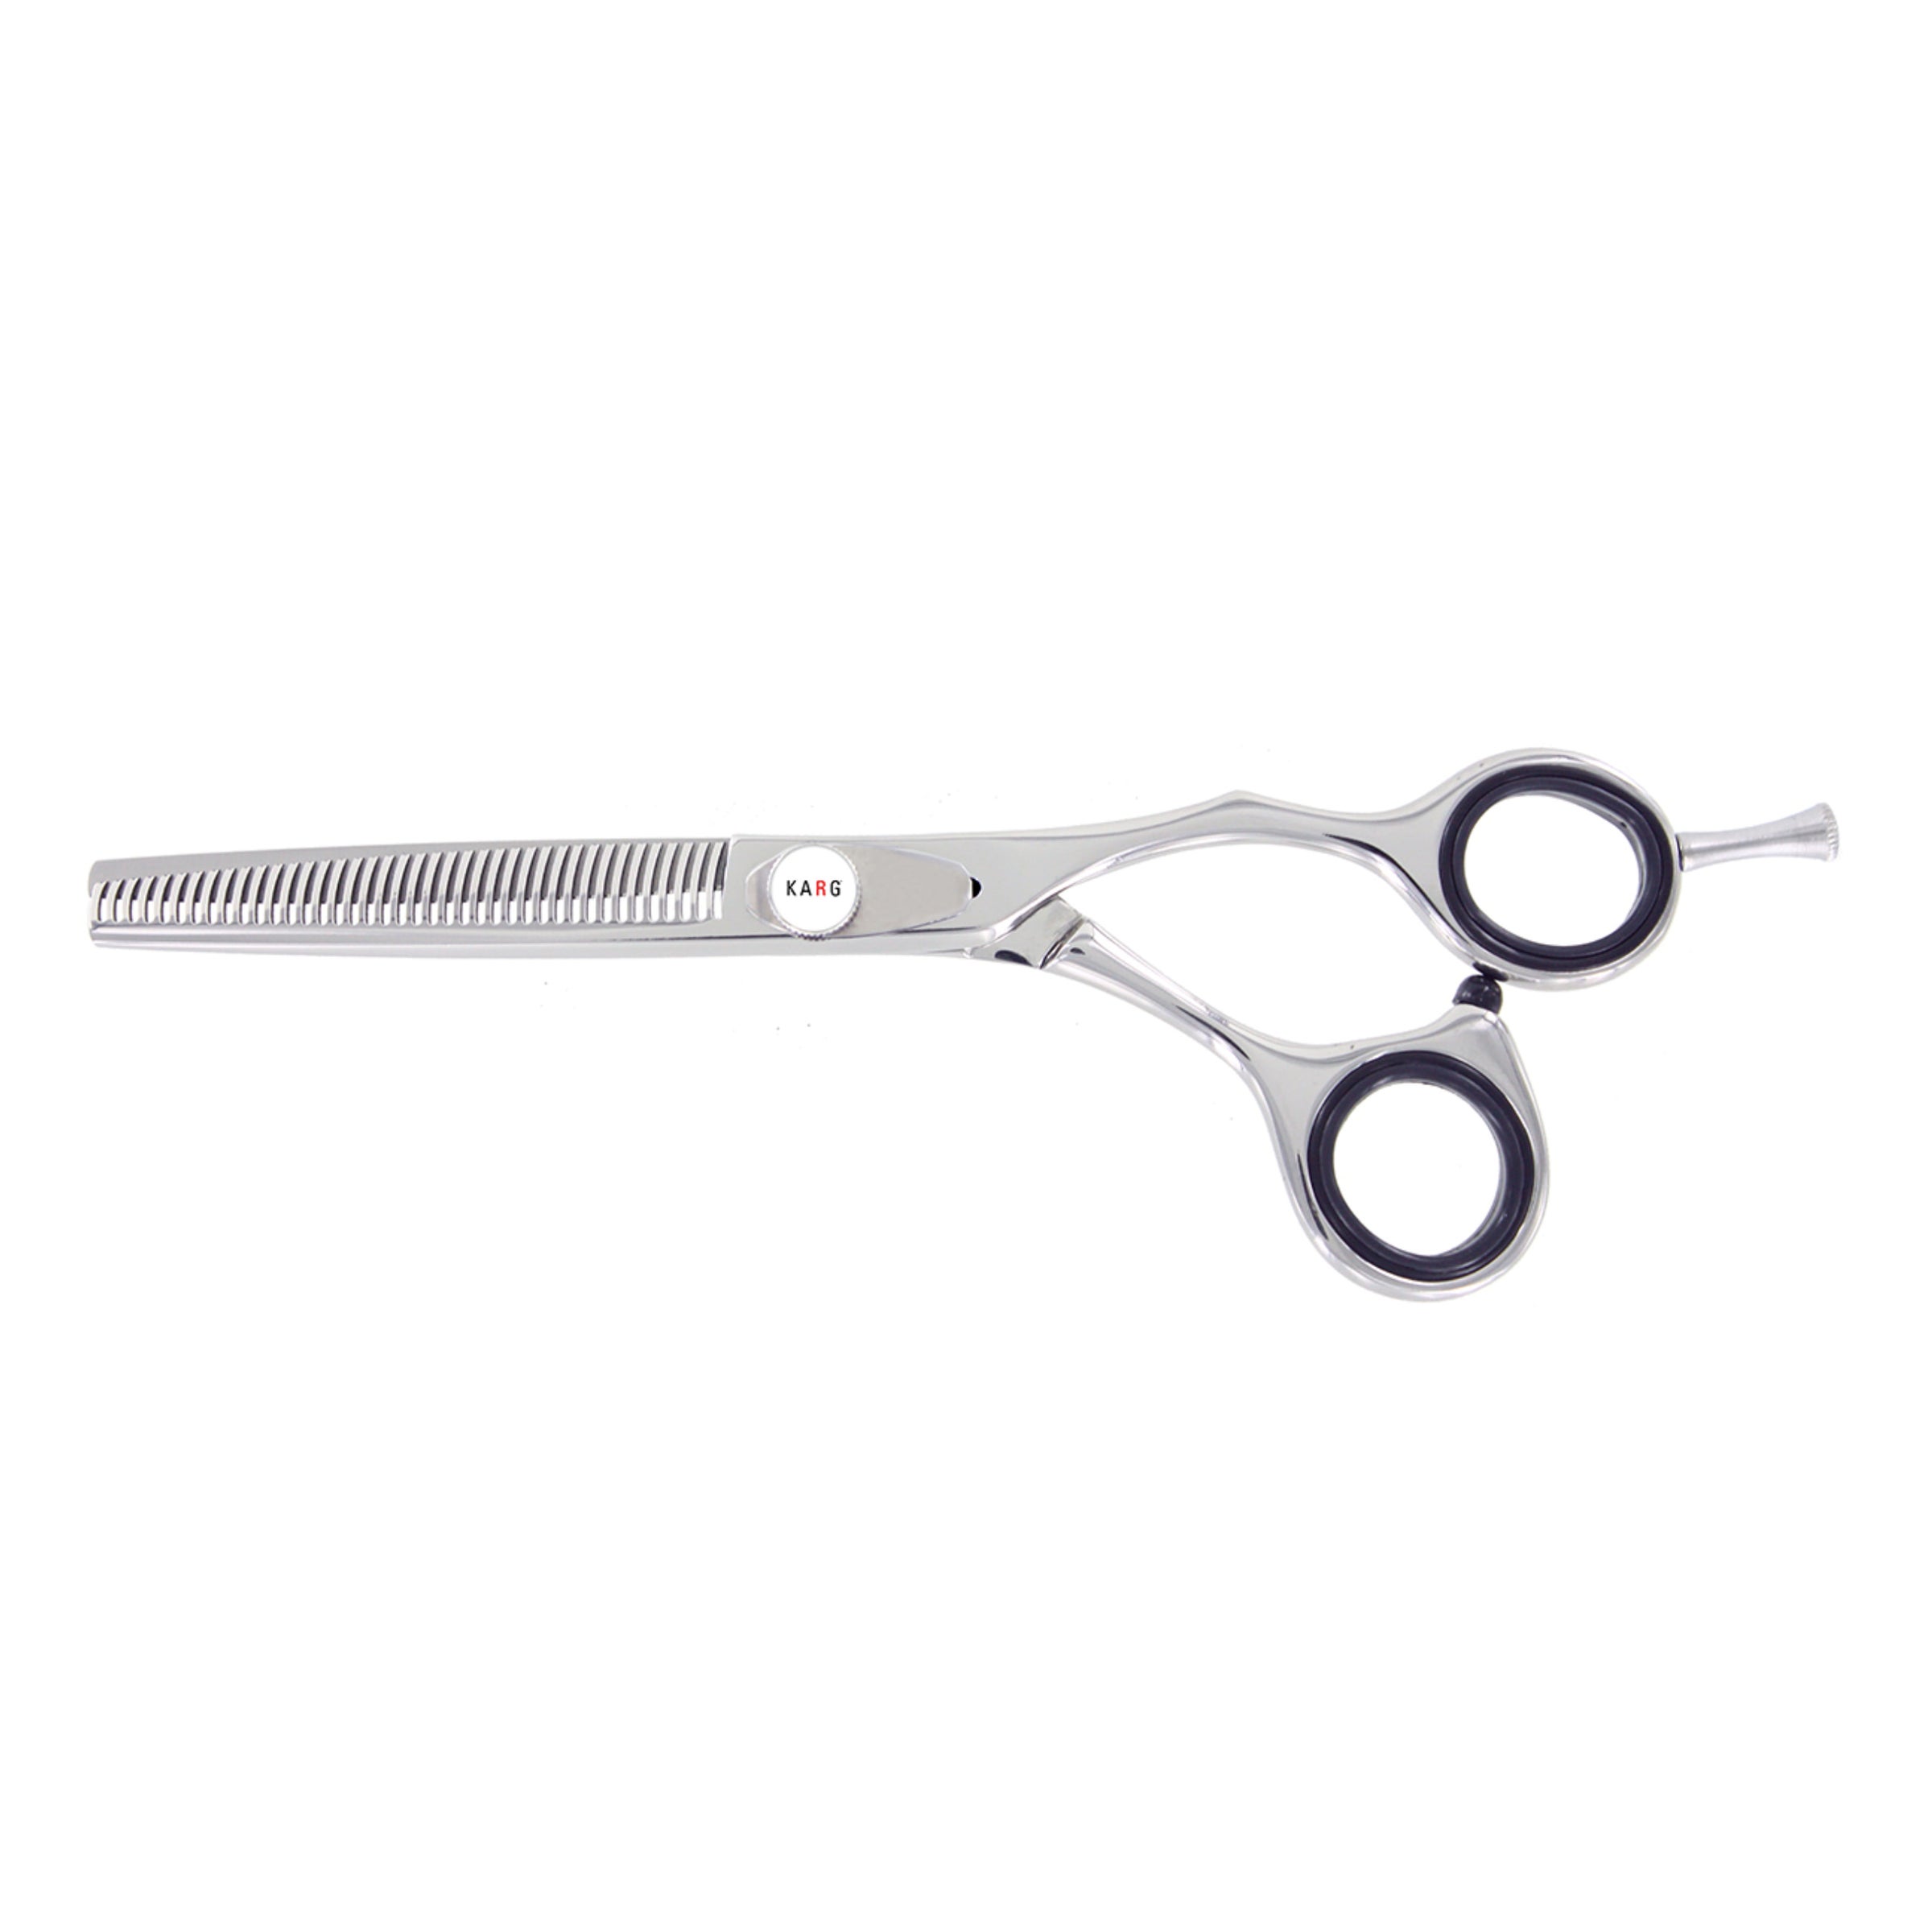 Bremod Hair Thinning Scissors BR-G308